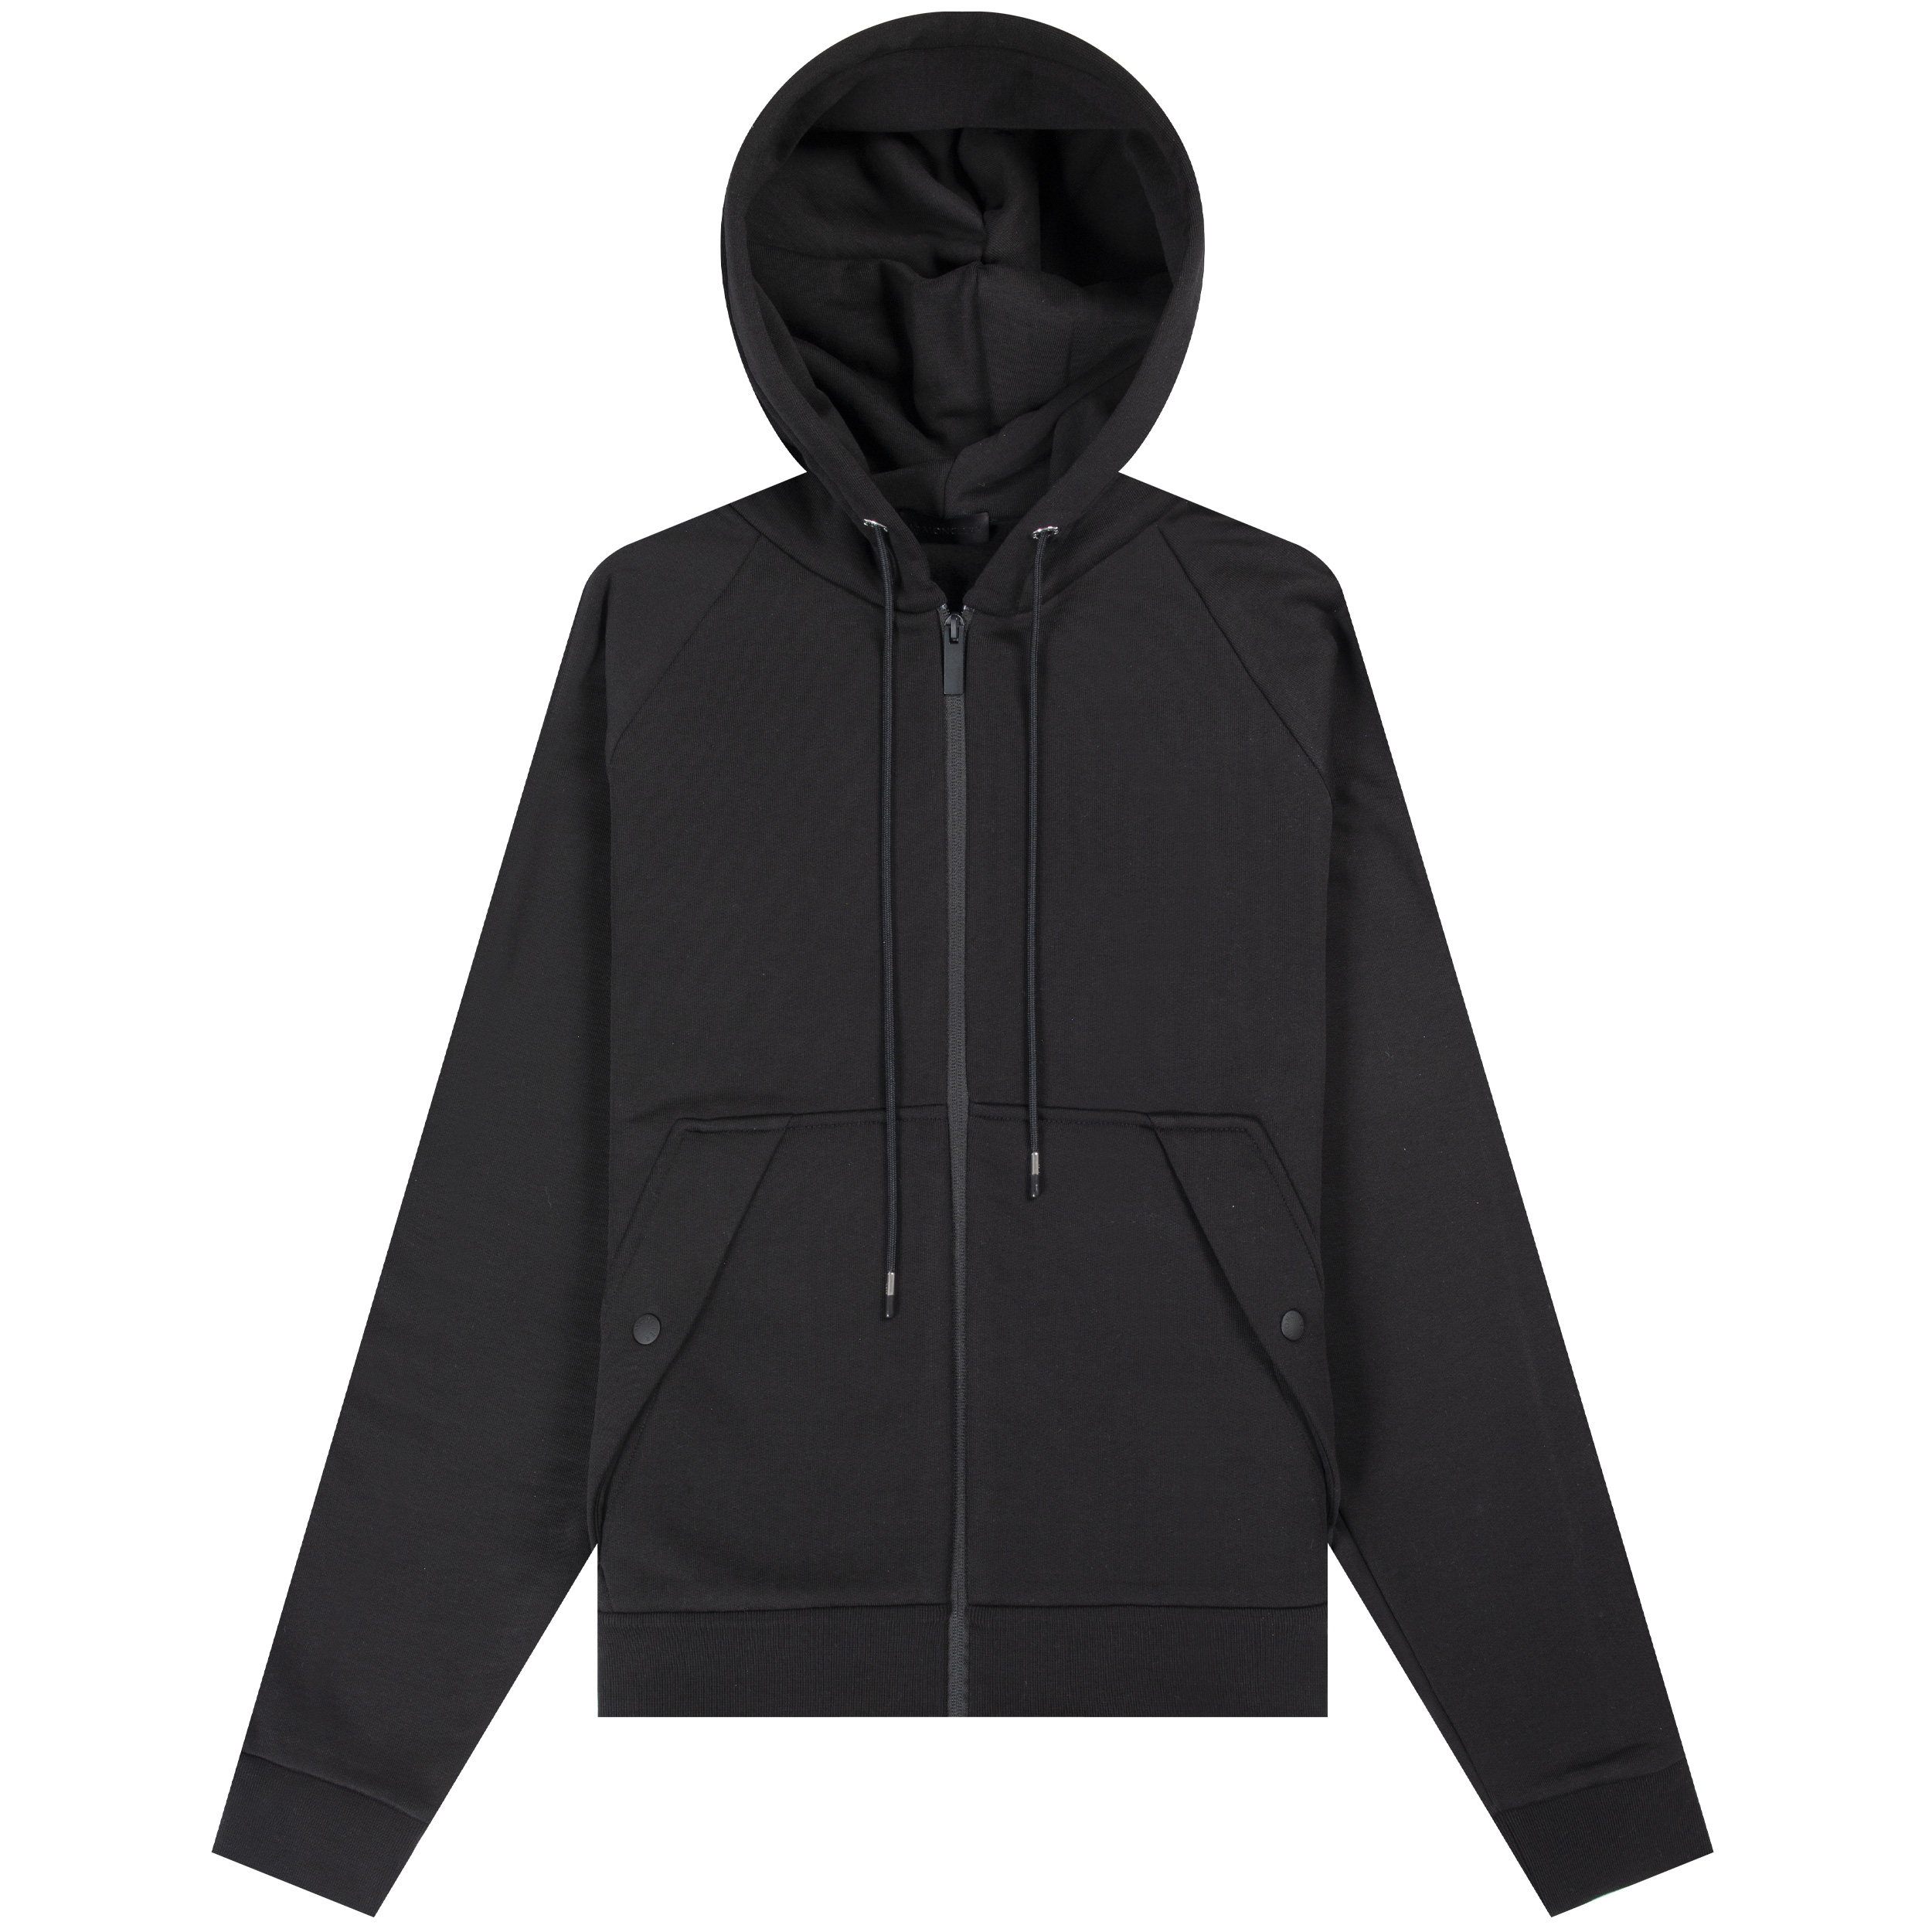 Moncler ’Arm Text’ Logo Hooded Full Zip Sweatshirt Black